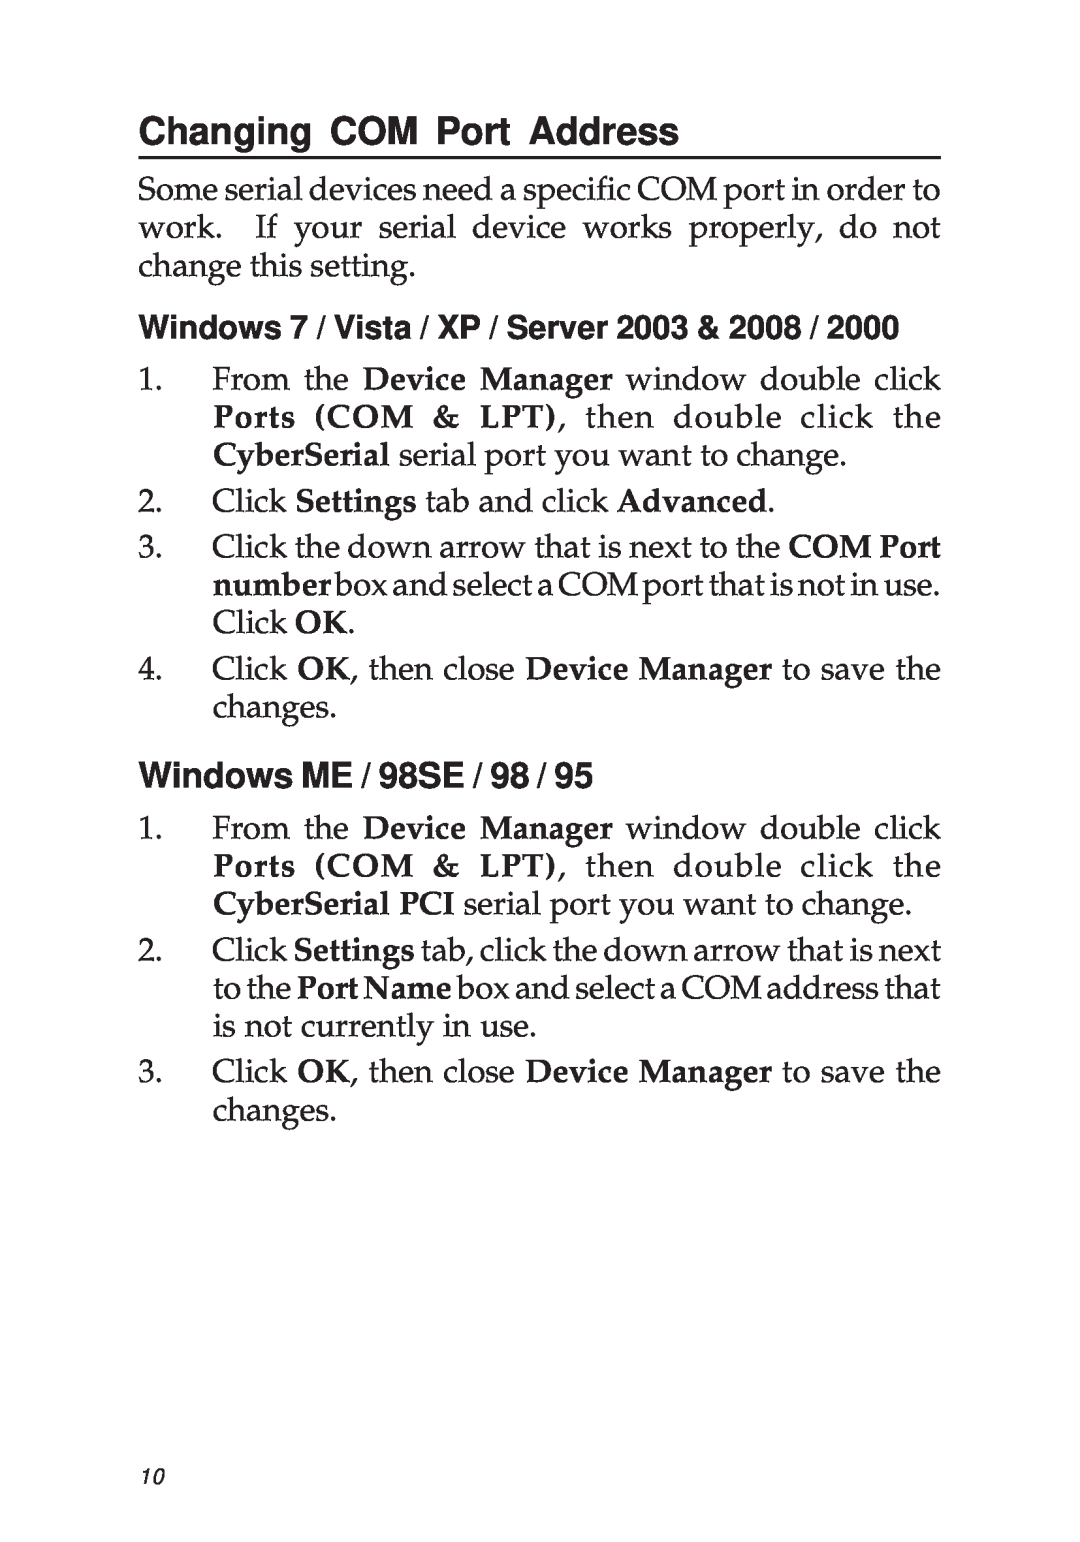 SIIG 04-0341D manual Changing COM Port Address, Windows ME / 98SE / 98, Windows 7 / Vista / XP / Server 2003 & 2008 